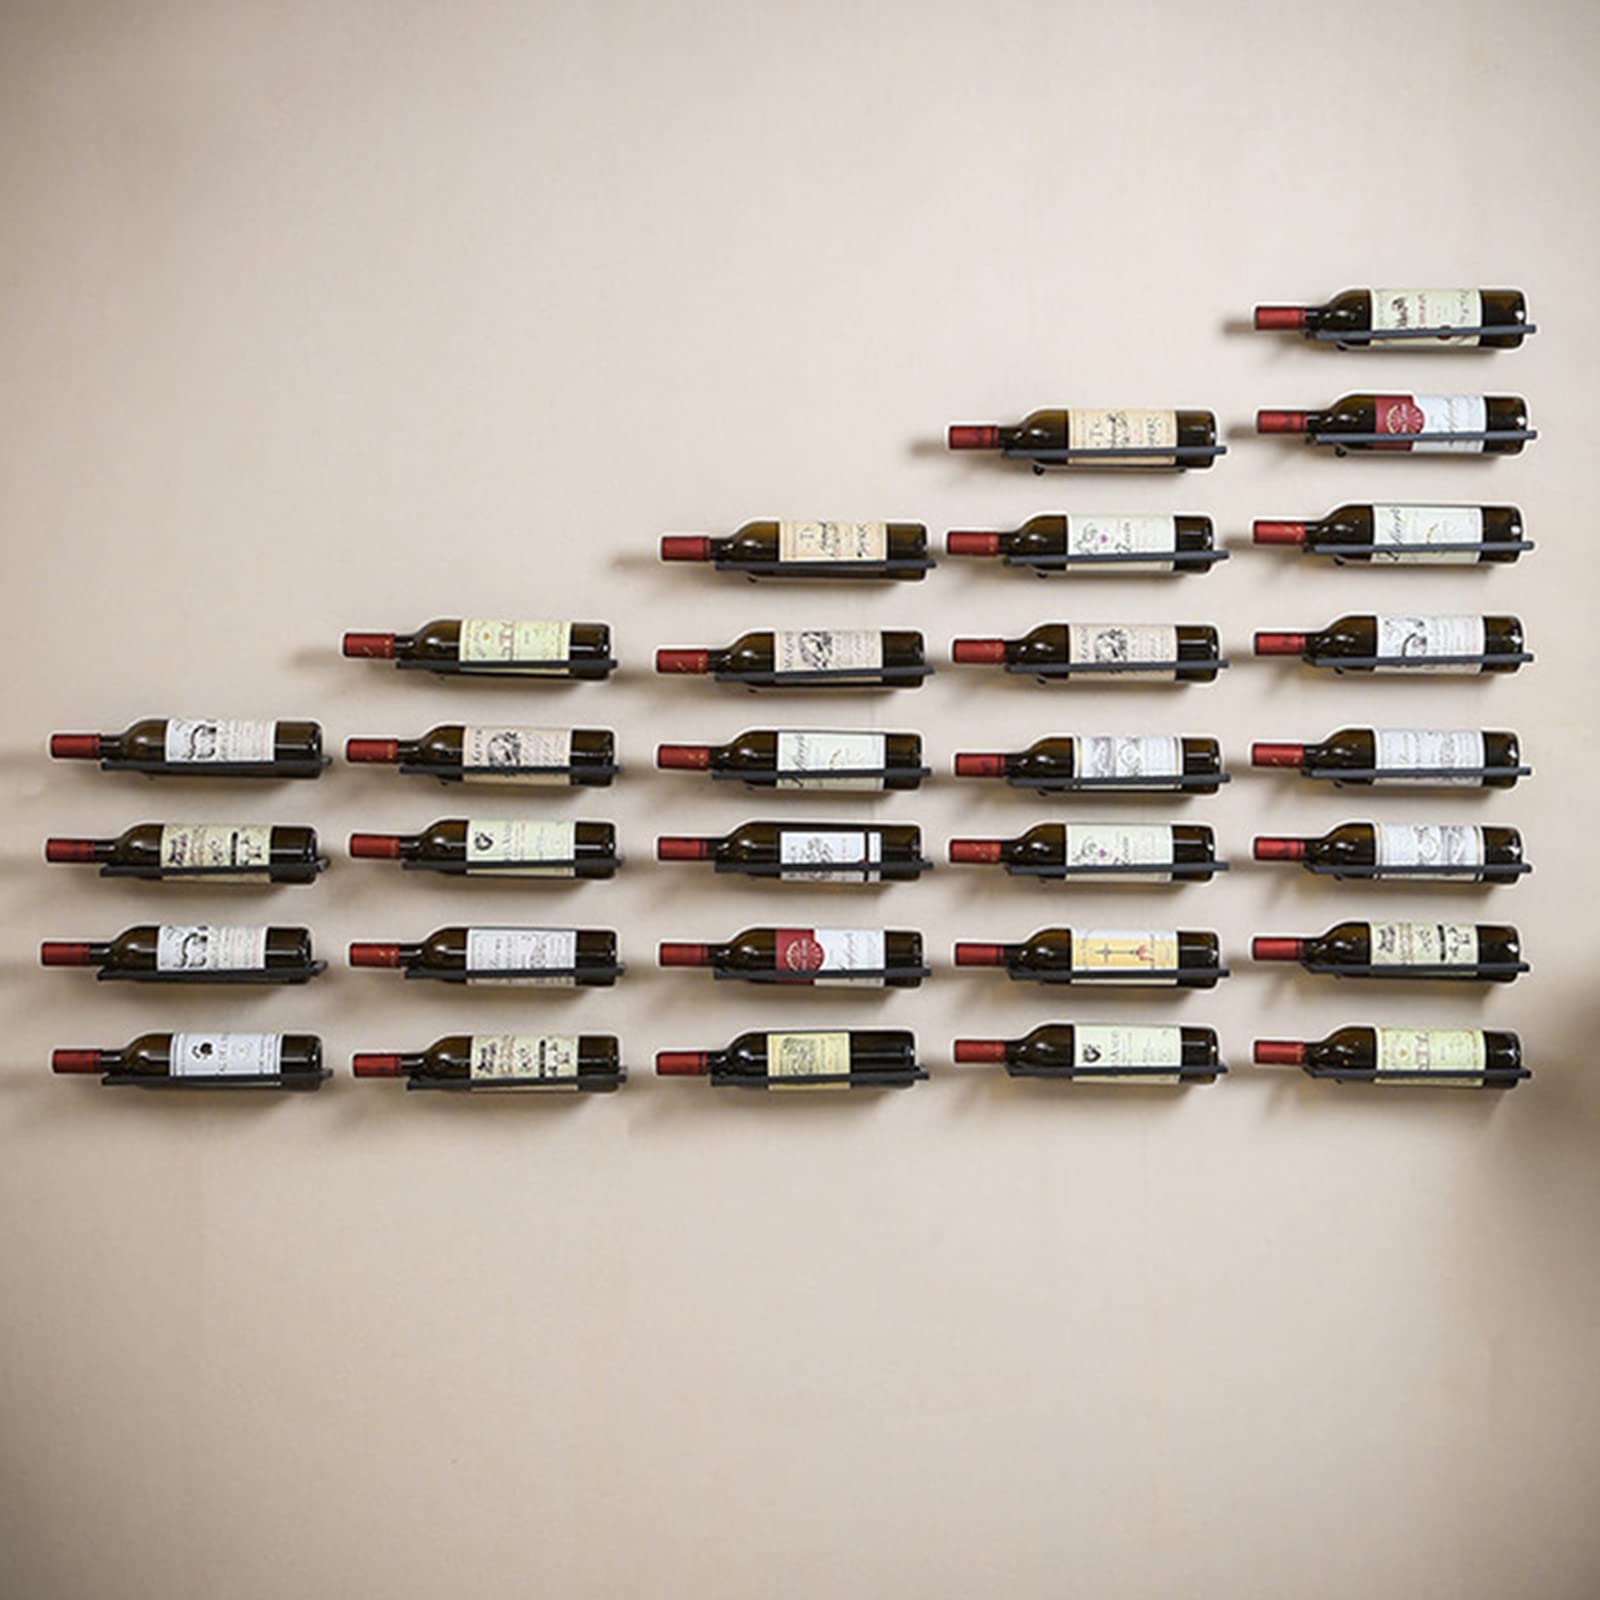 Floating Wine Rack